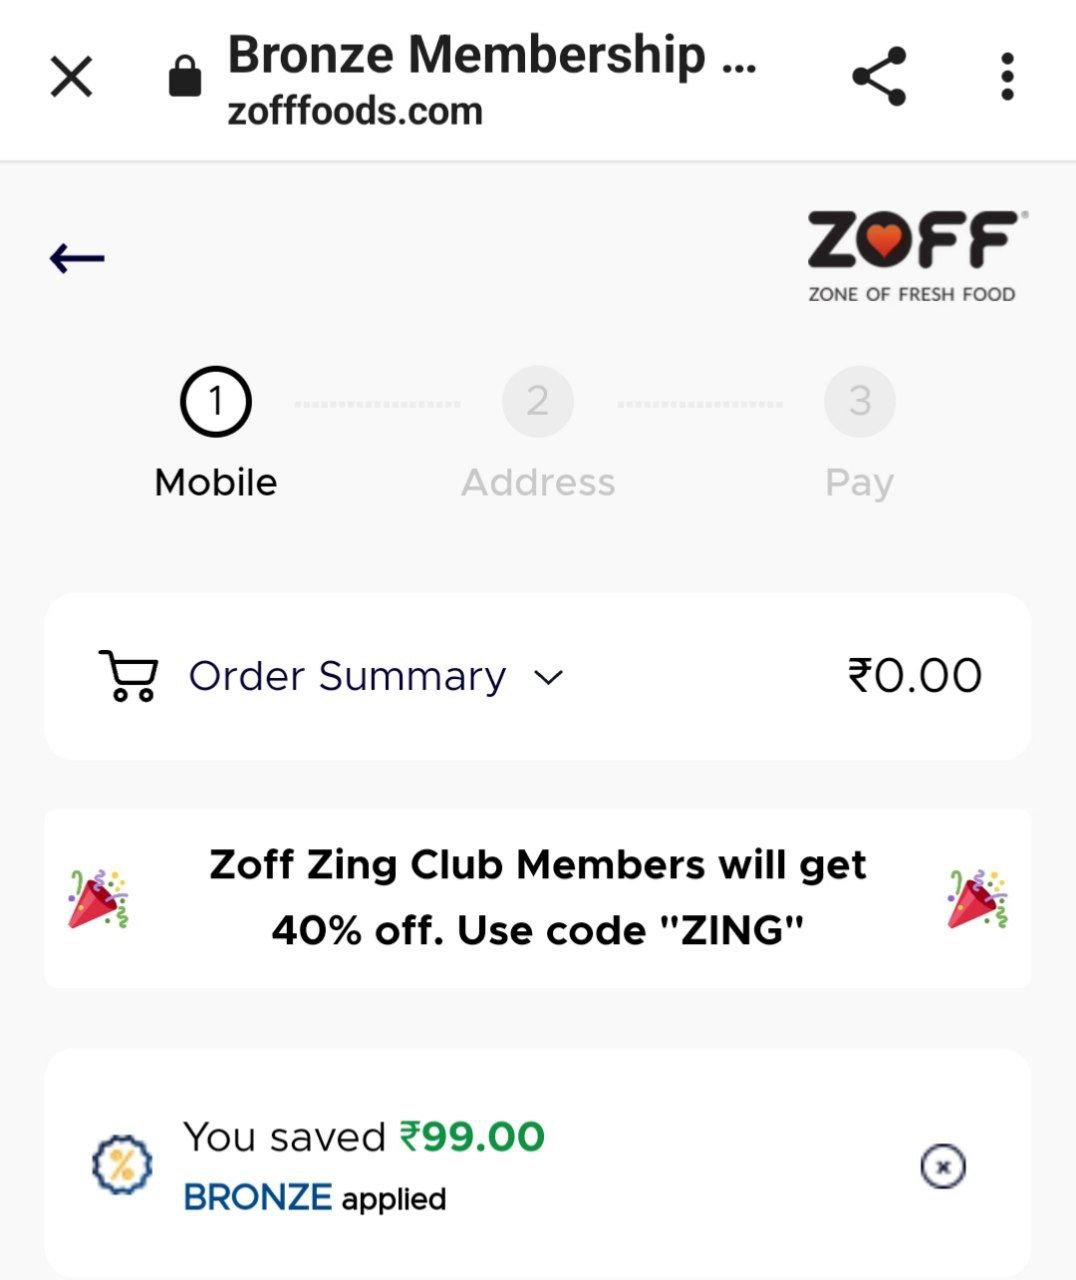 Zoff Bronze Membership Free